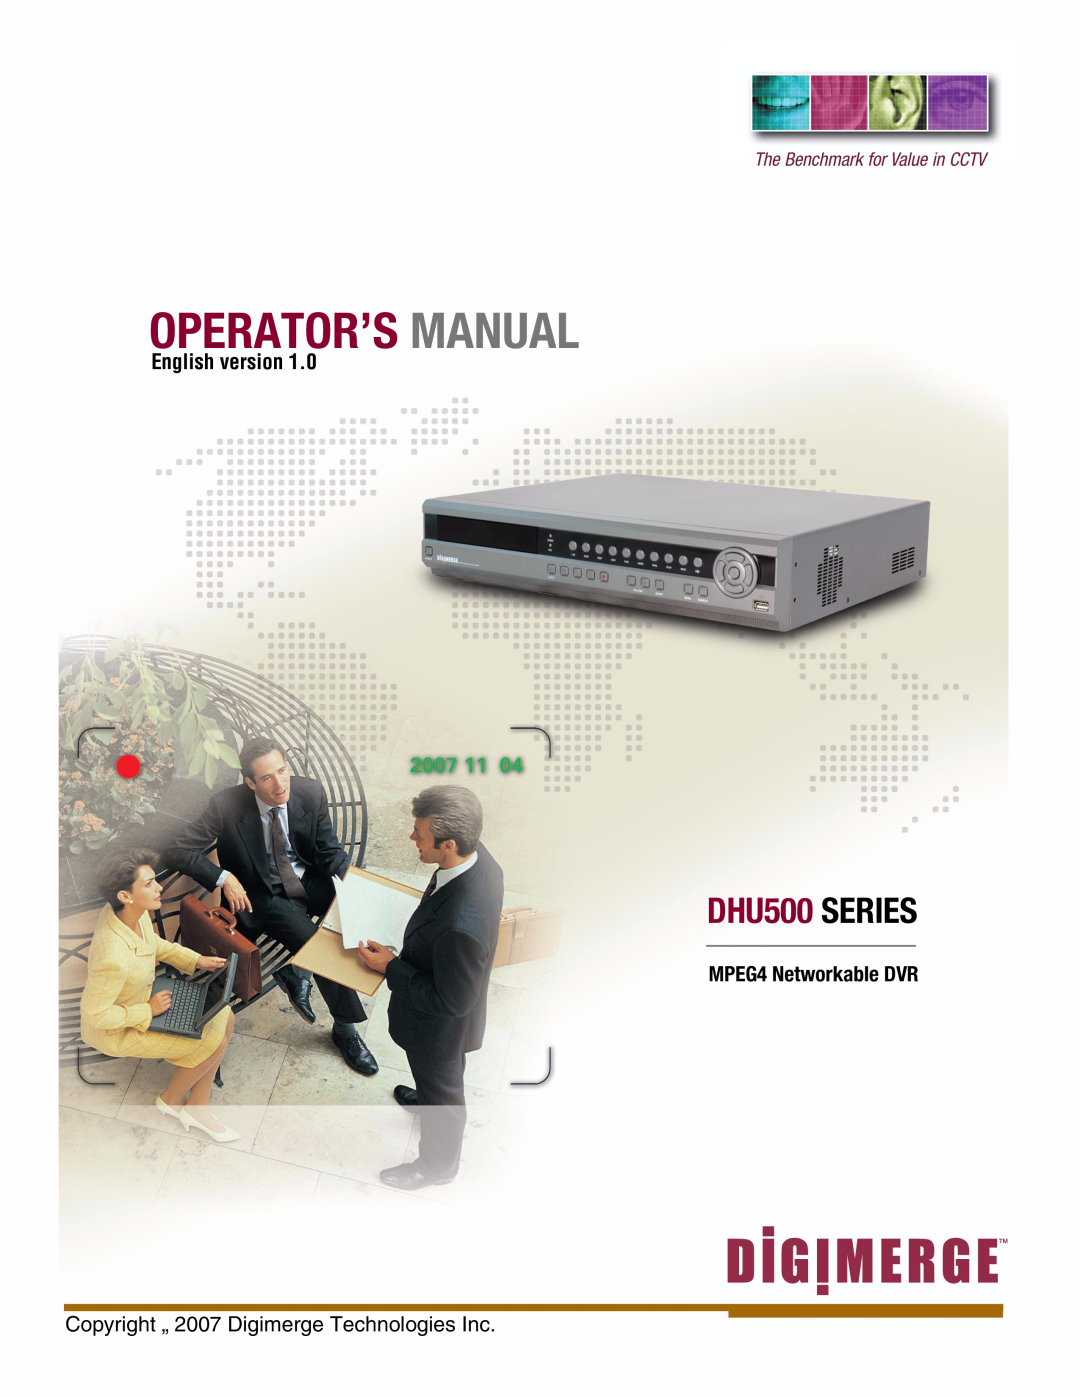 LOREX Technology manual Operator’S Manual, DHU500 SERIES, English version, MPEG4 Networkable DVR 